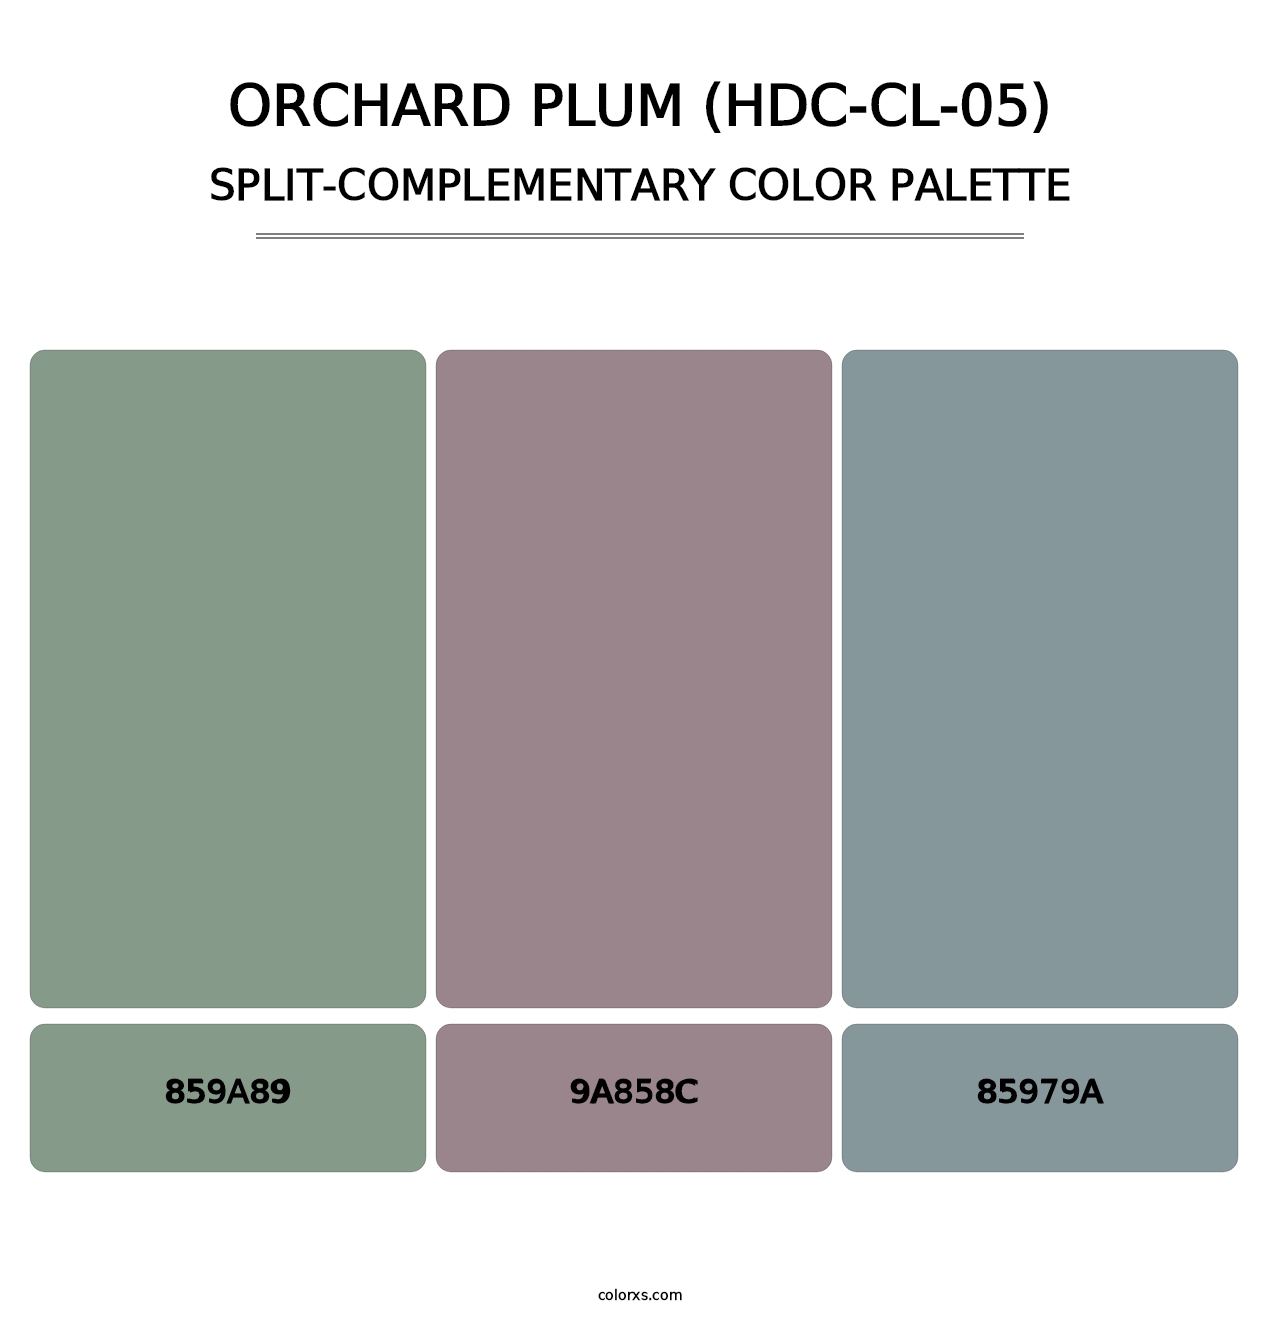 Orchard Plum (HDC-CL-05) - Split-Complementary Color Palette